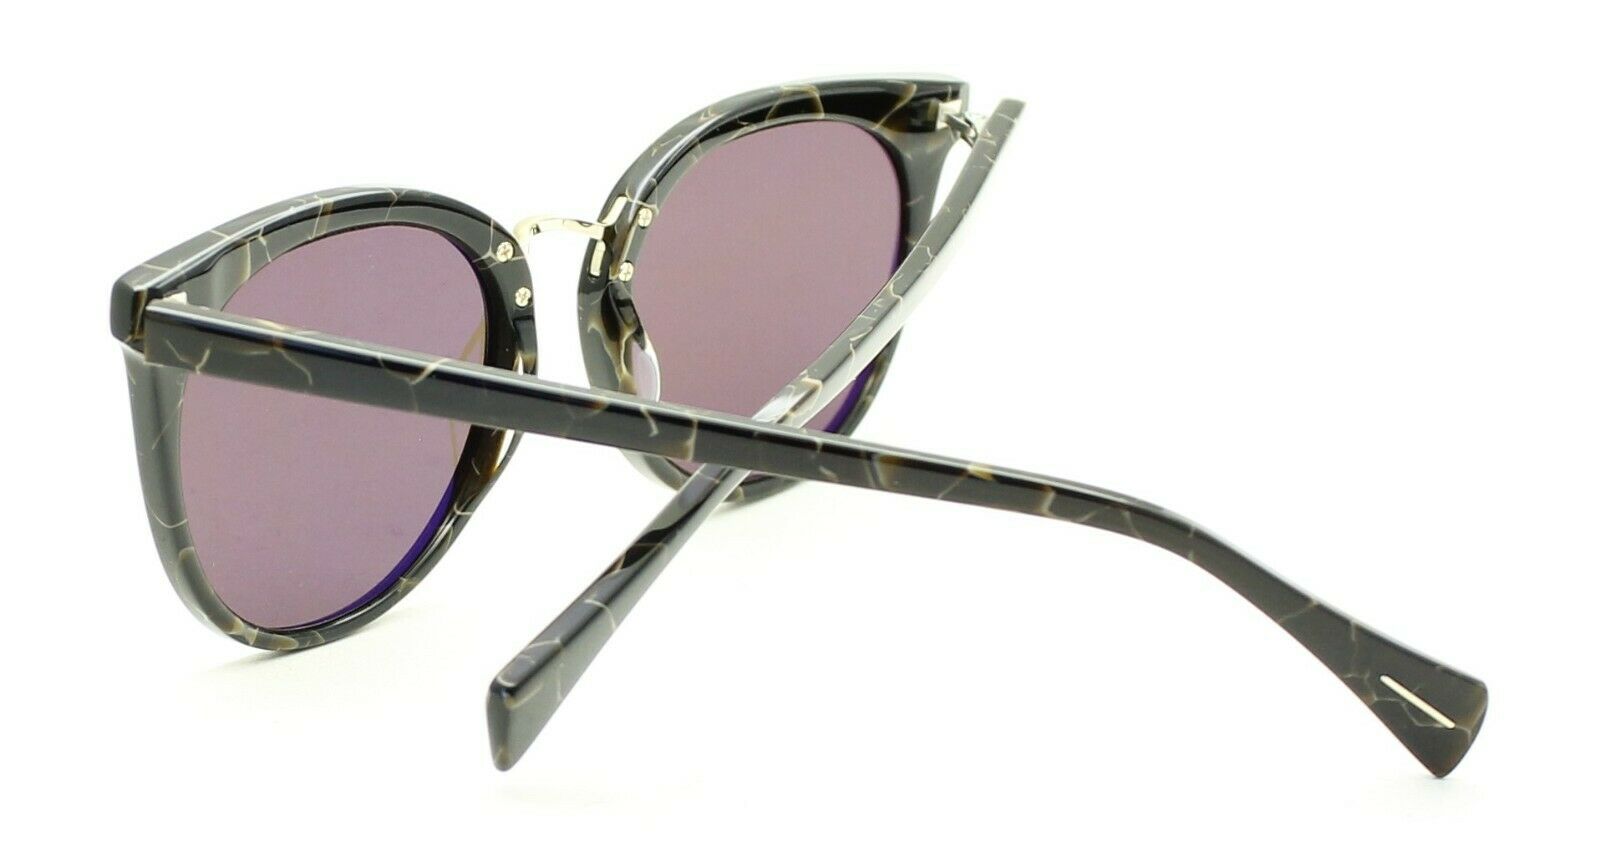 YOHJI YAMAMOTO YS5006 134 51mm Brown Sunglasses Eyewear Shades Frames - France